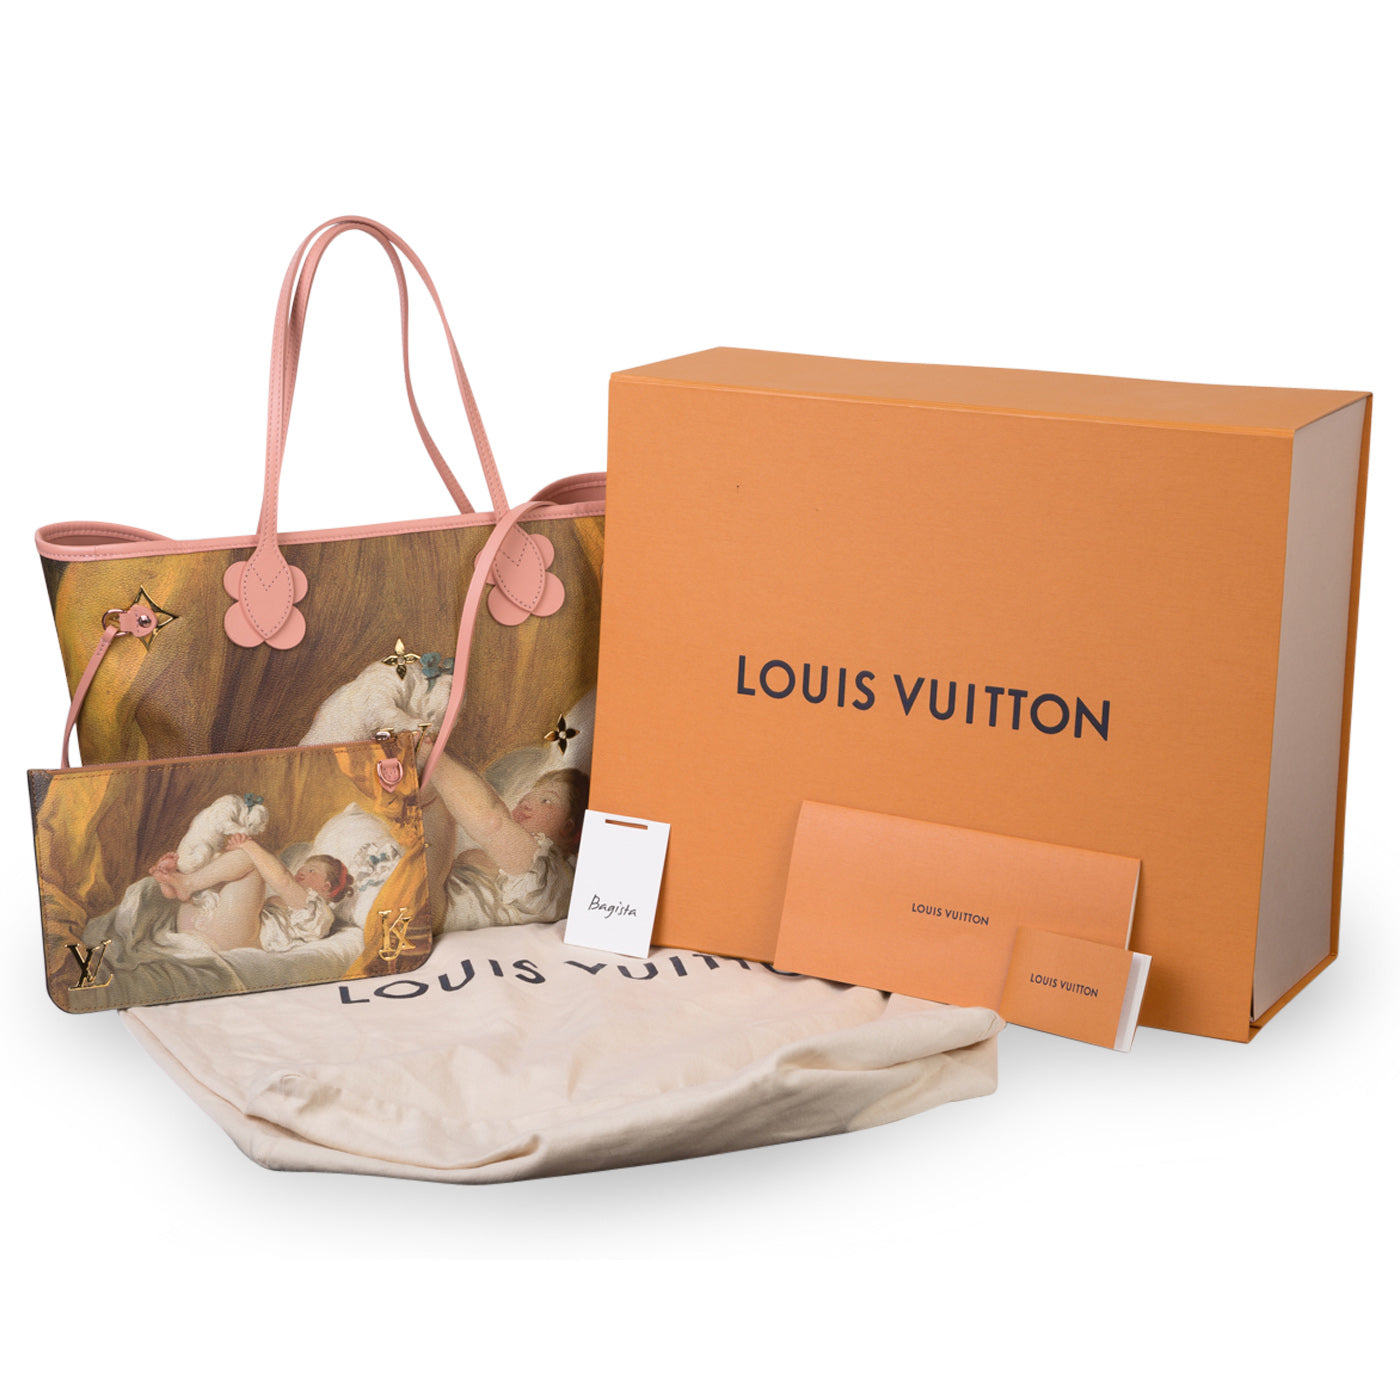 Louis Vuitton Jeff Koons Master Collection Fragonard Neverfull MM Tote  54lk511s